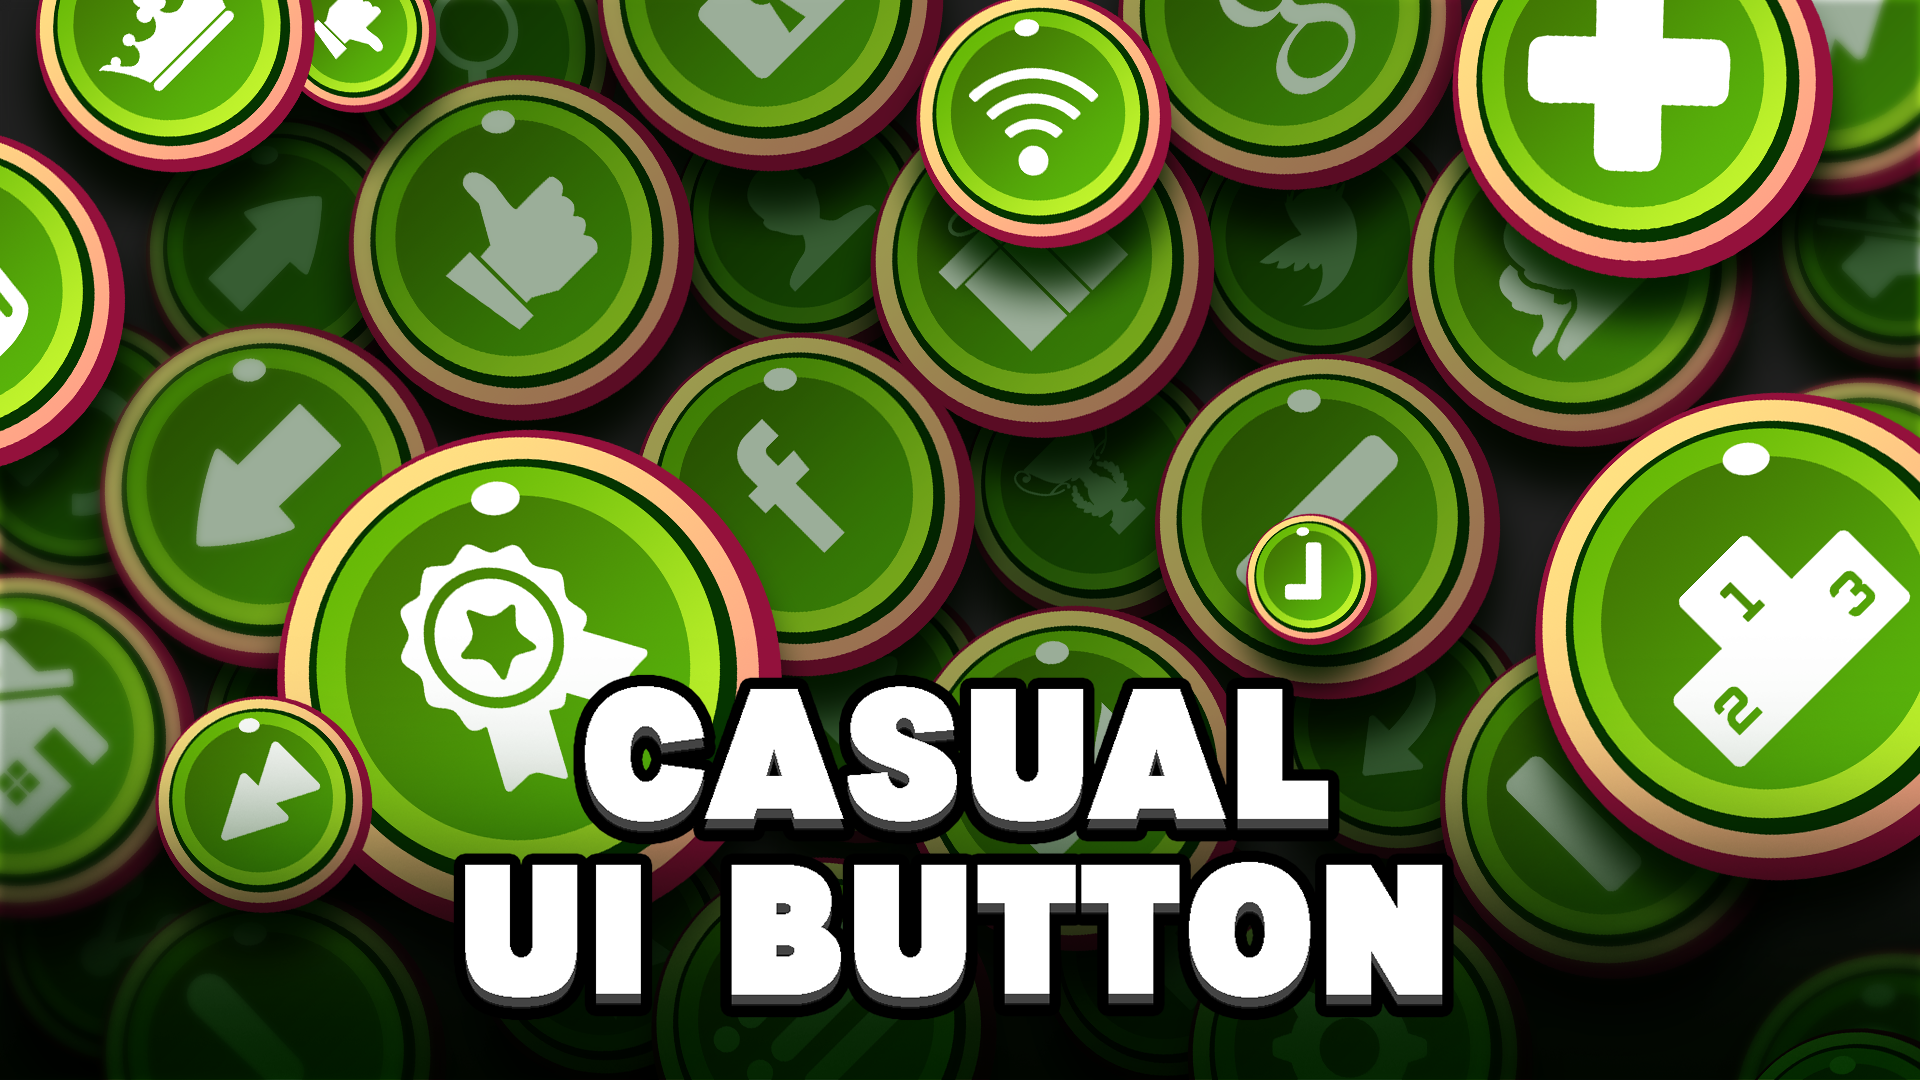 Casual UI Button #11